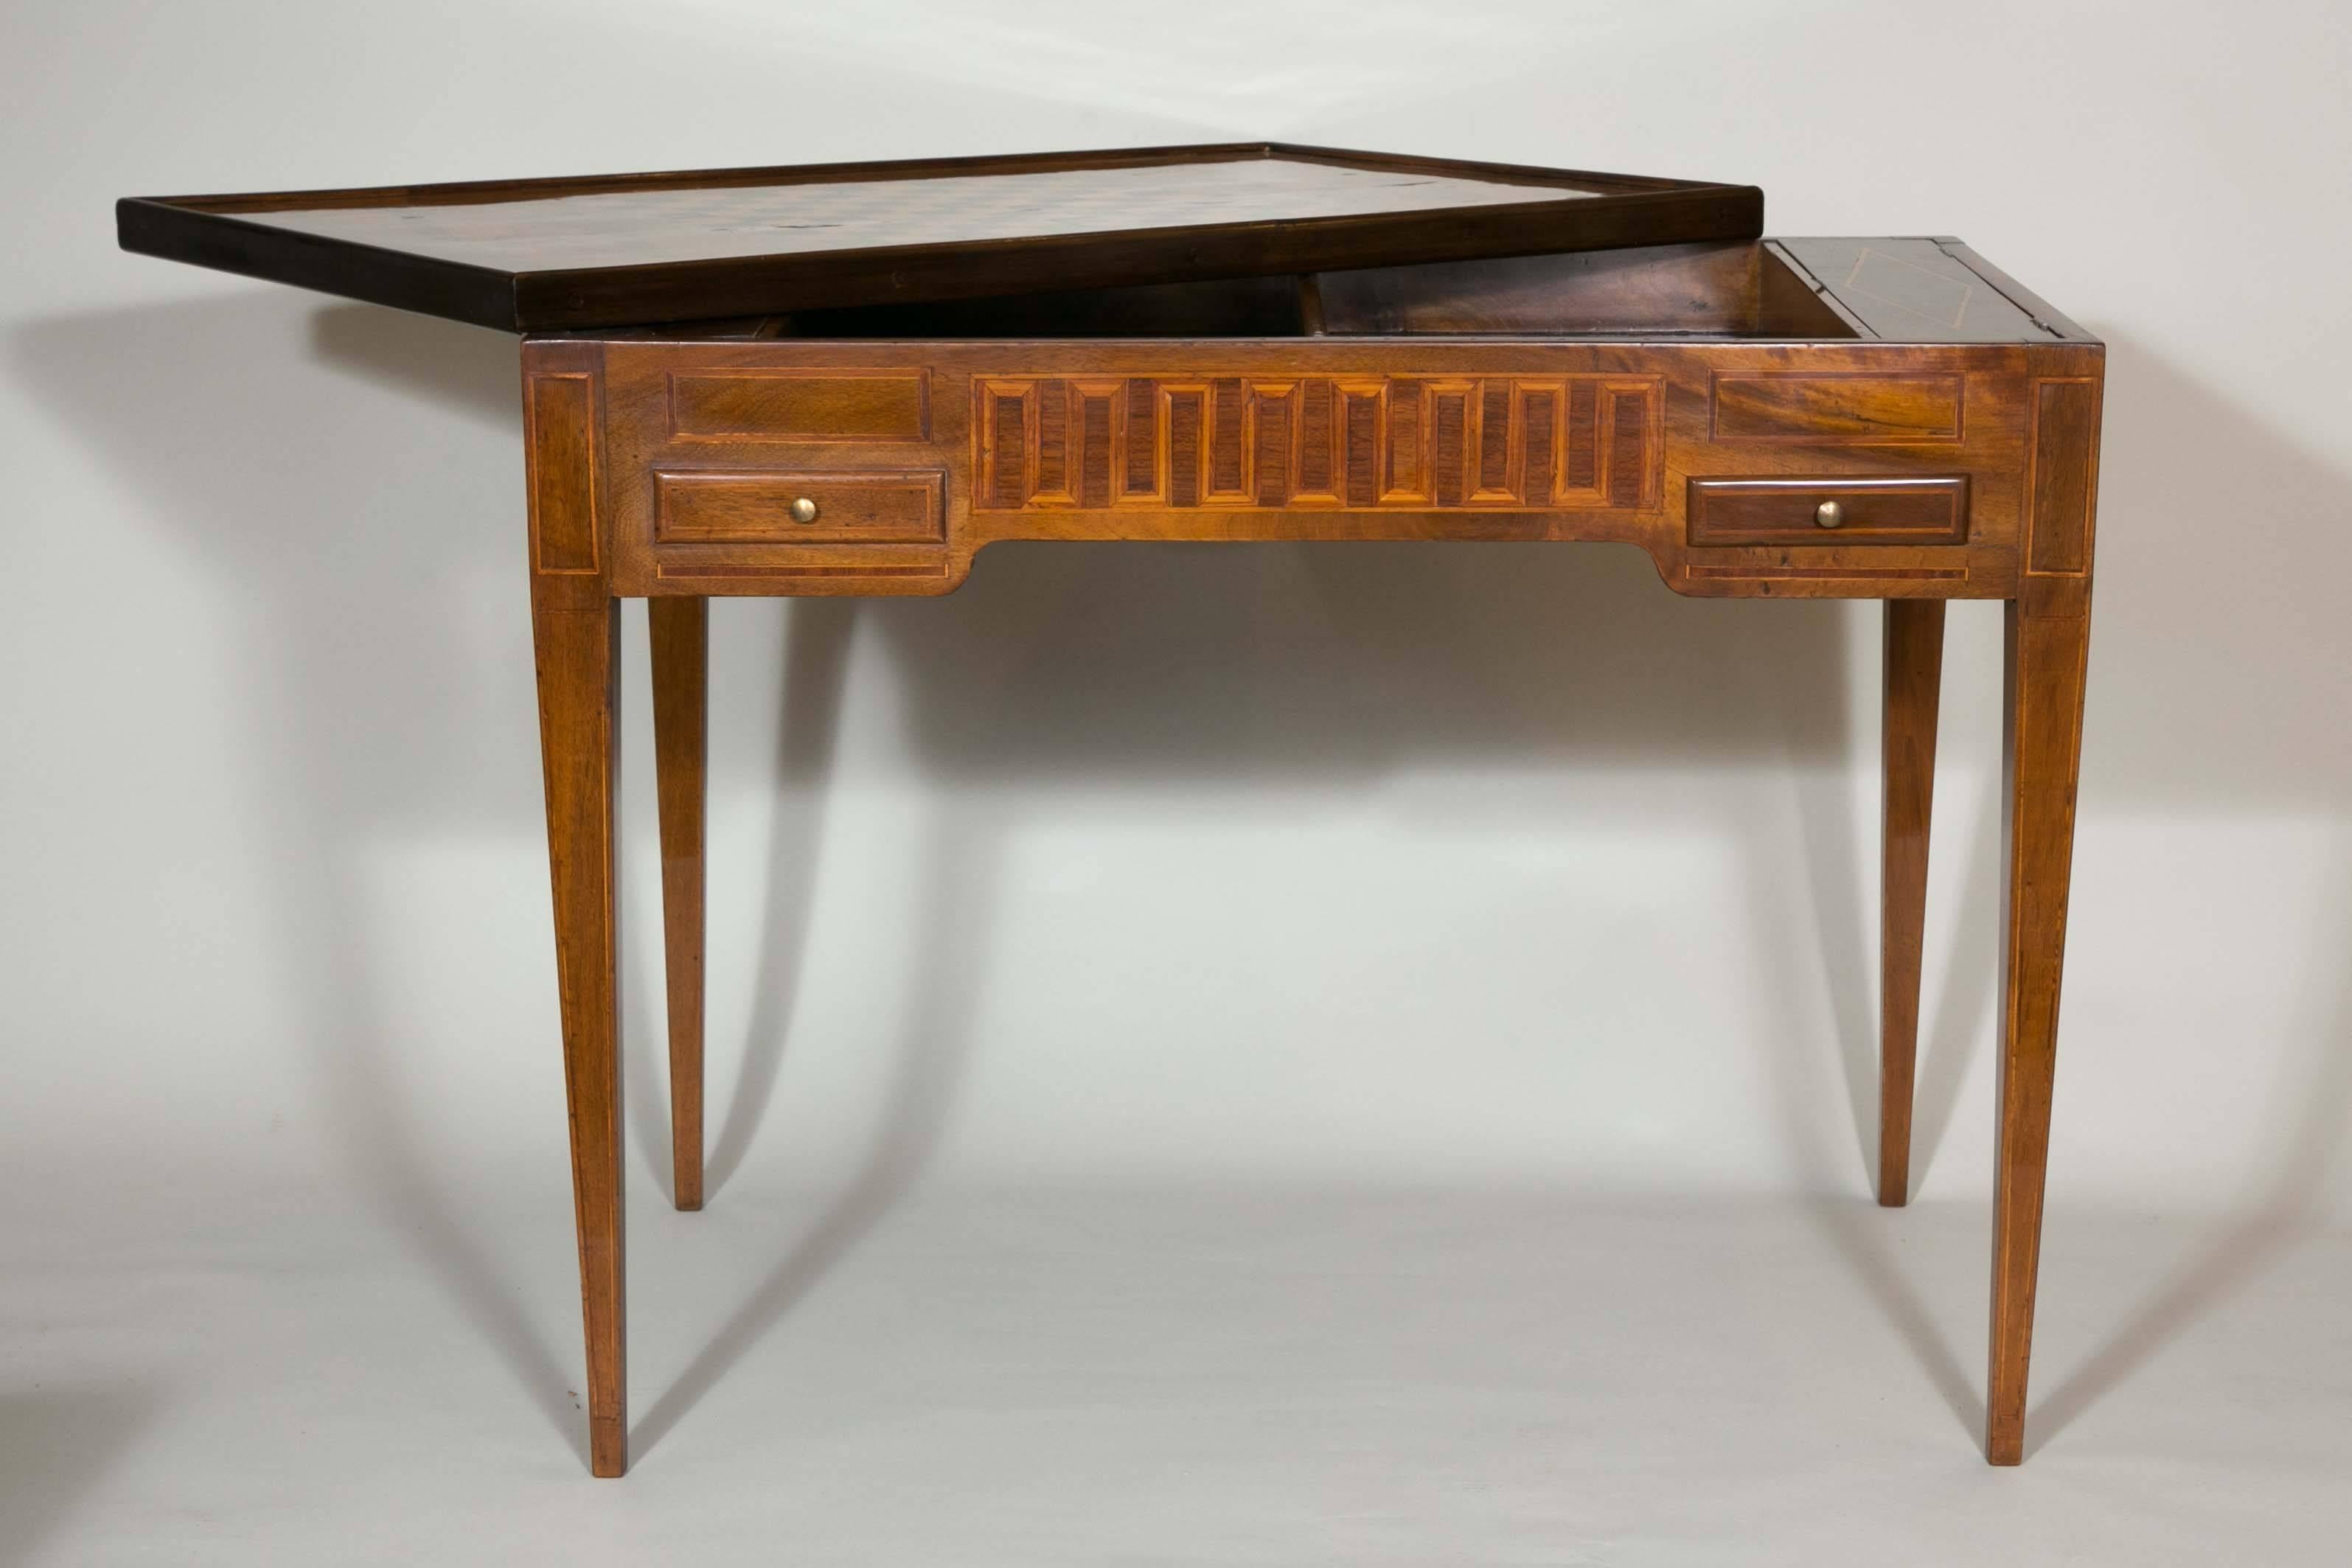 18th century games table in marquetry of precious and rare woods, Louis XVI period, Luxury interior design.
 